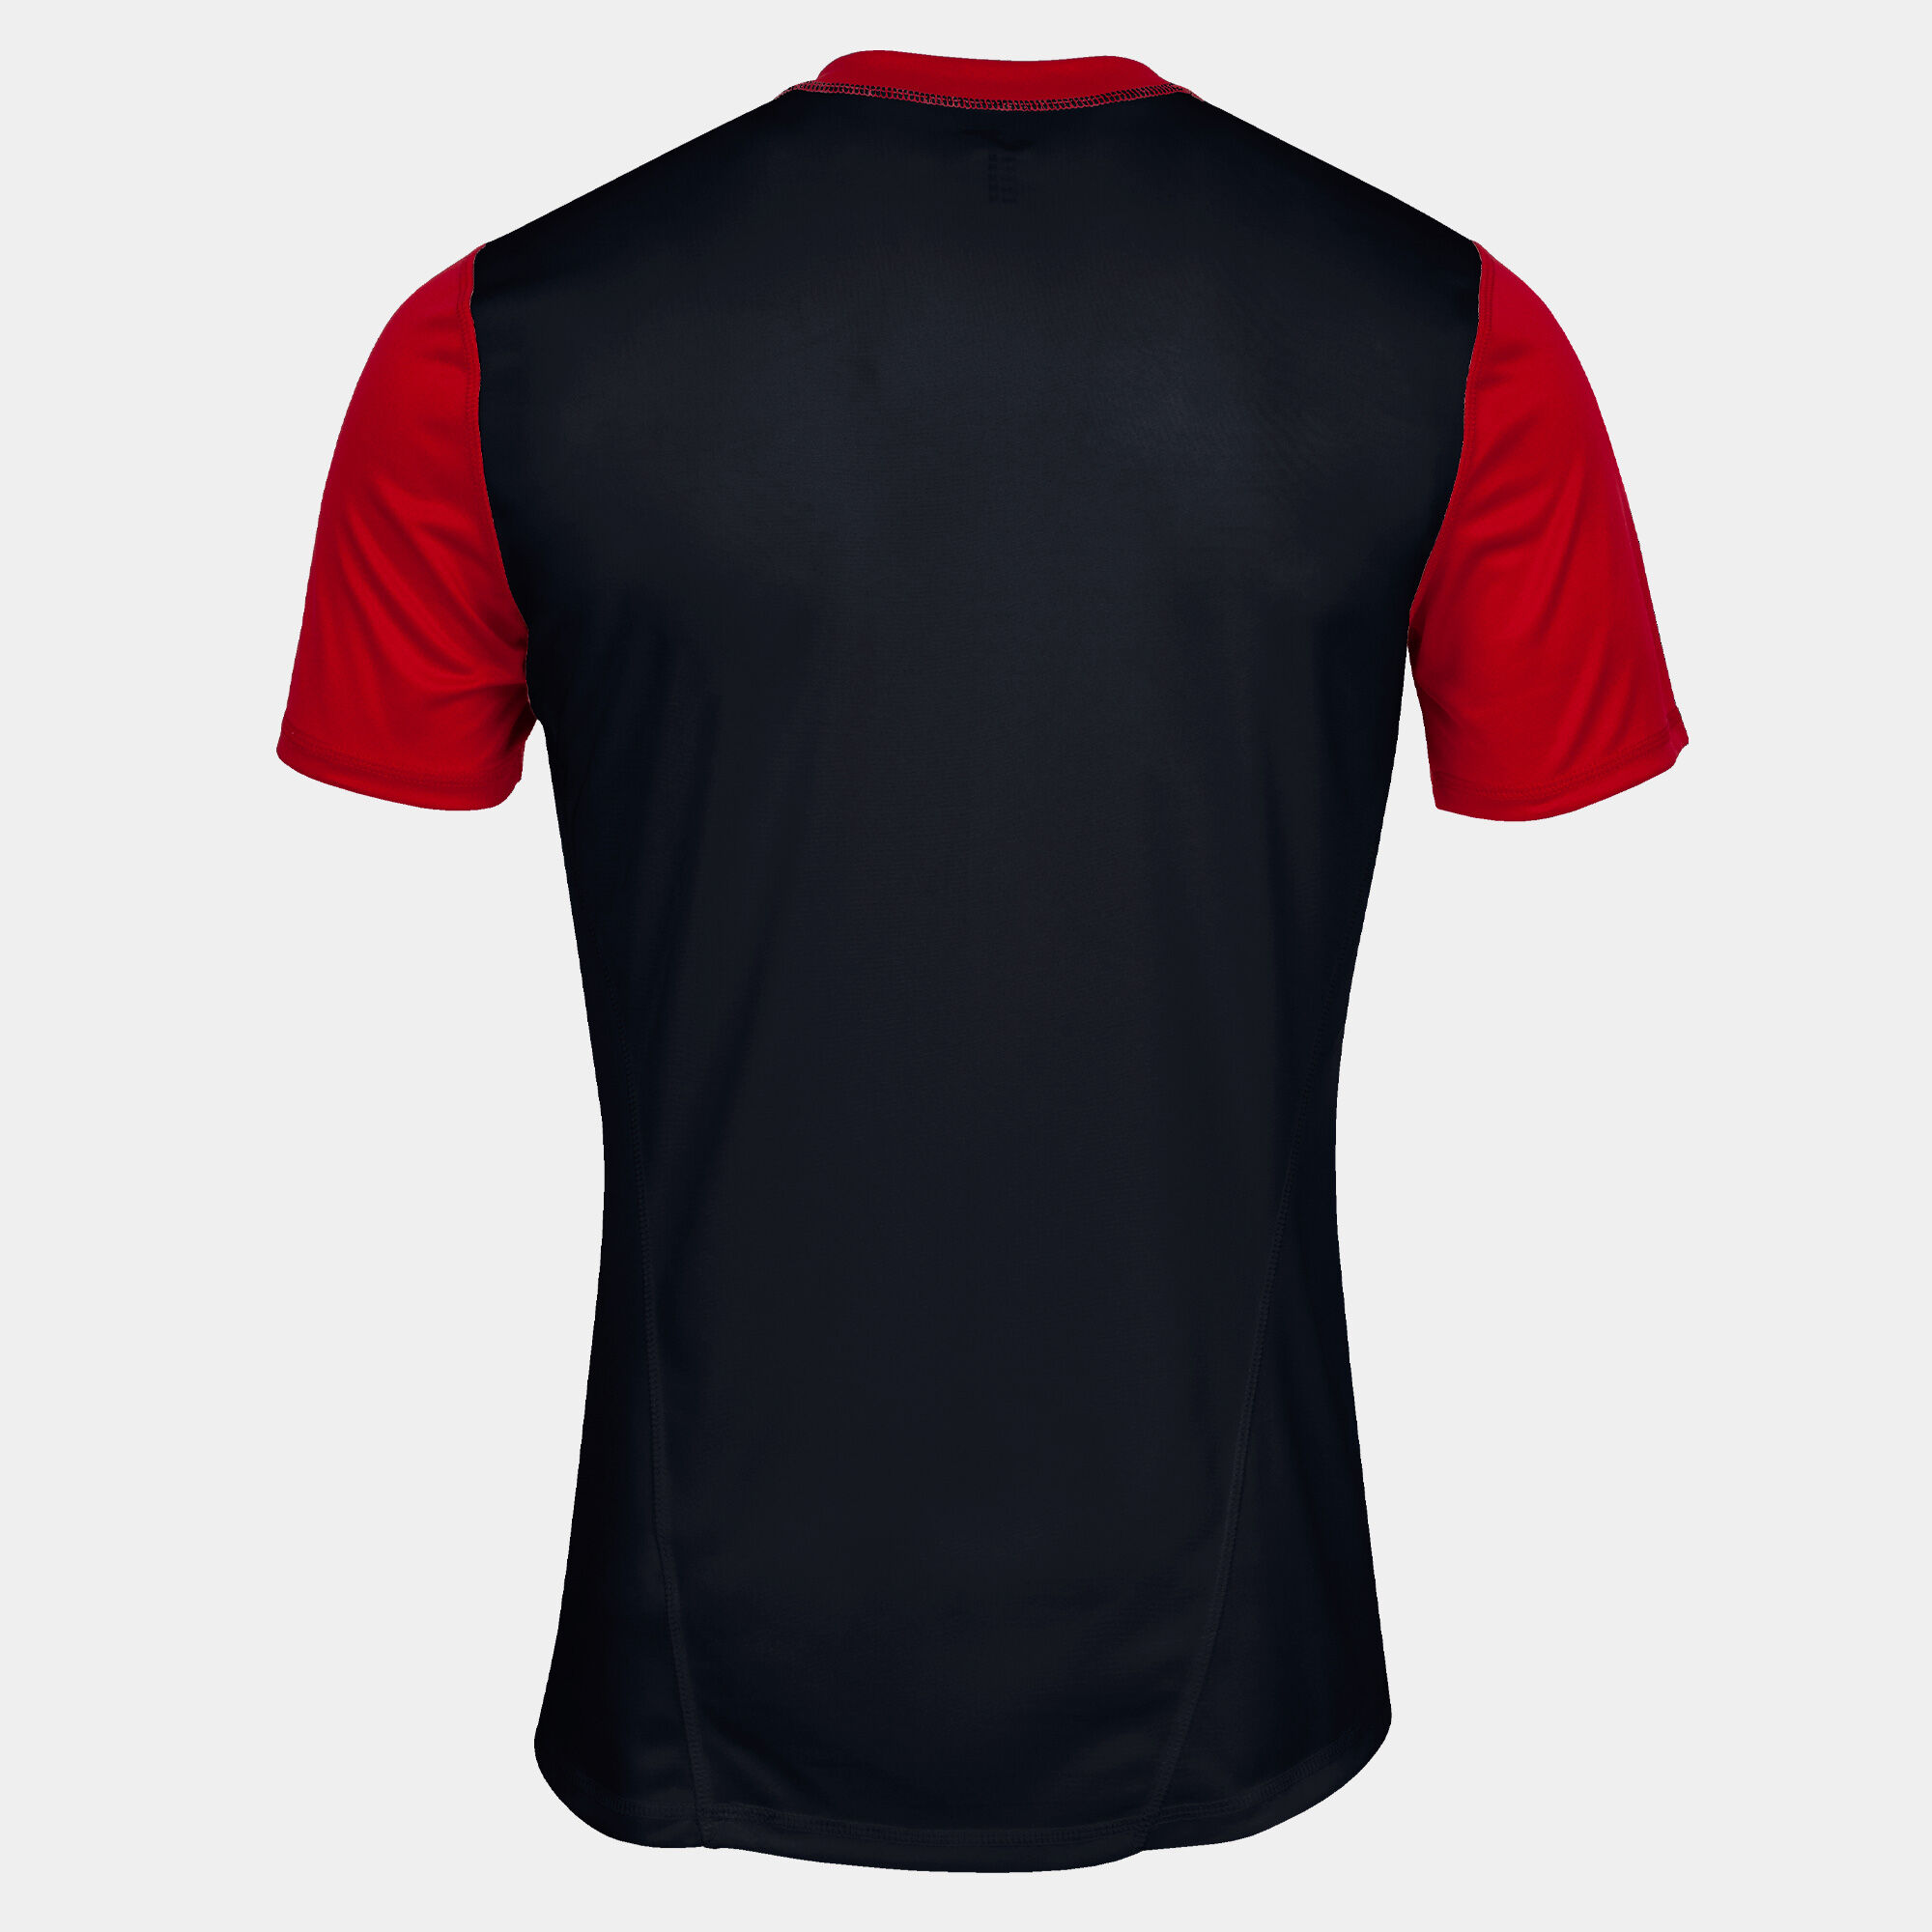 Camiseta manga corta hombre Hispa IV negro rojo